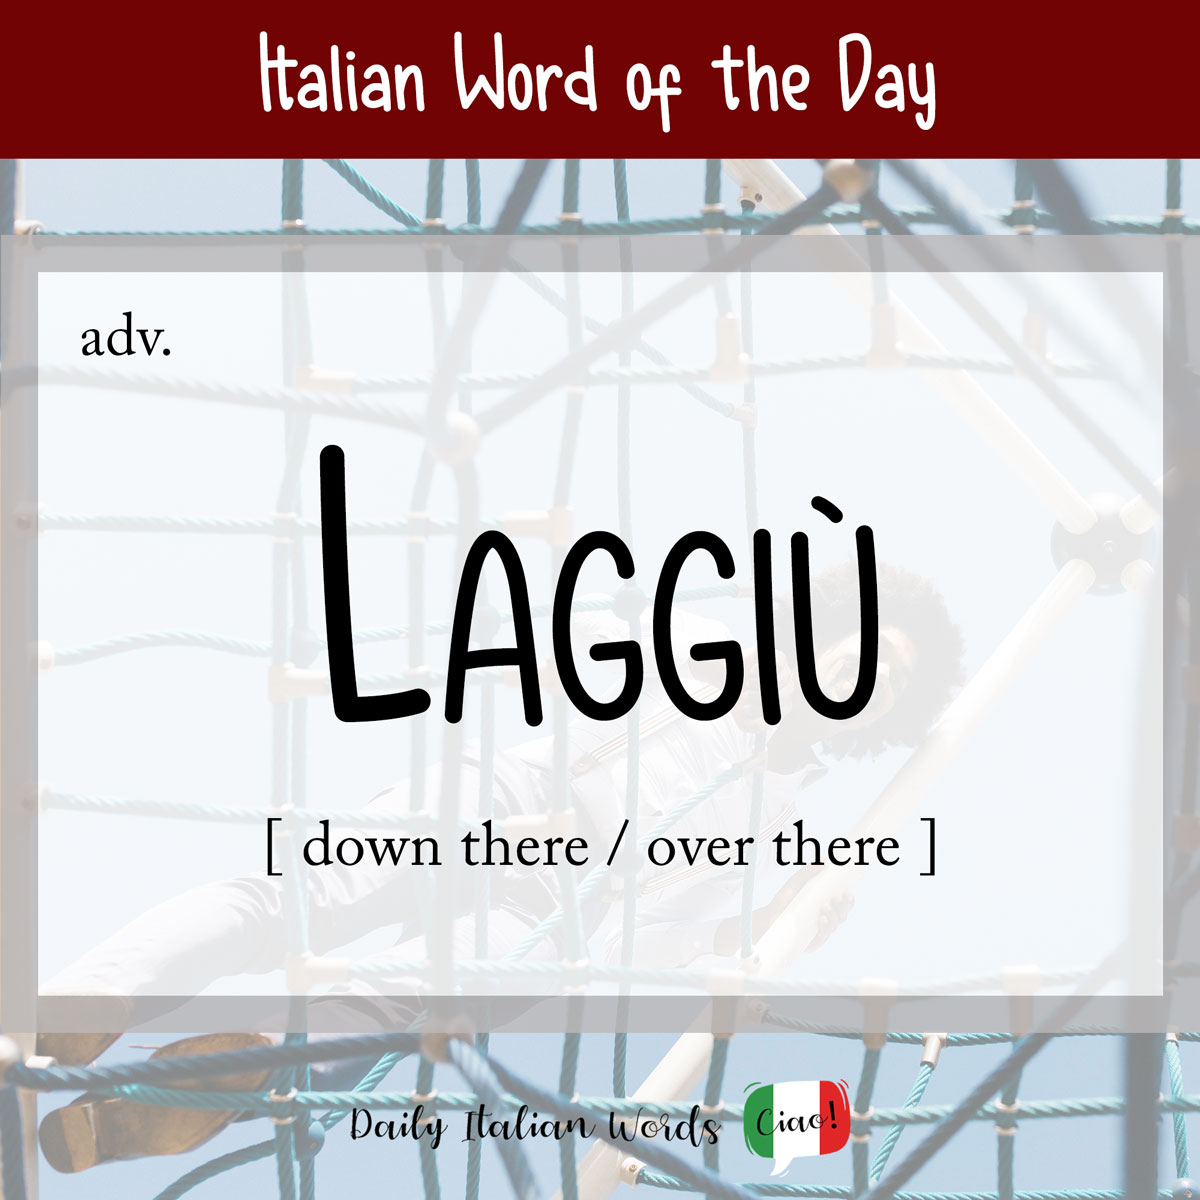 Italian word 'laggiù'